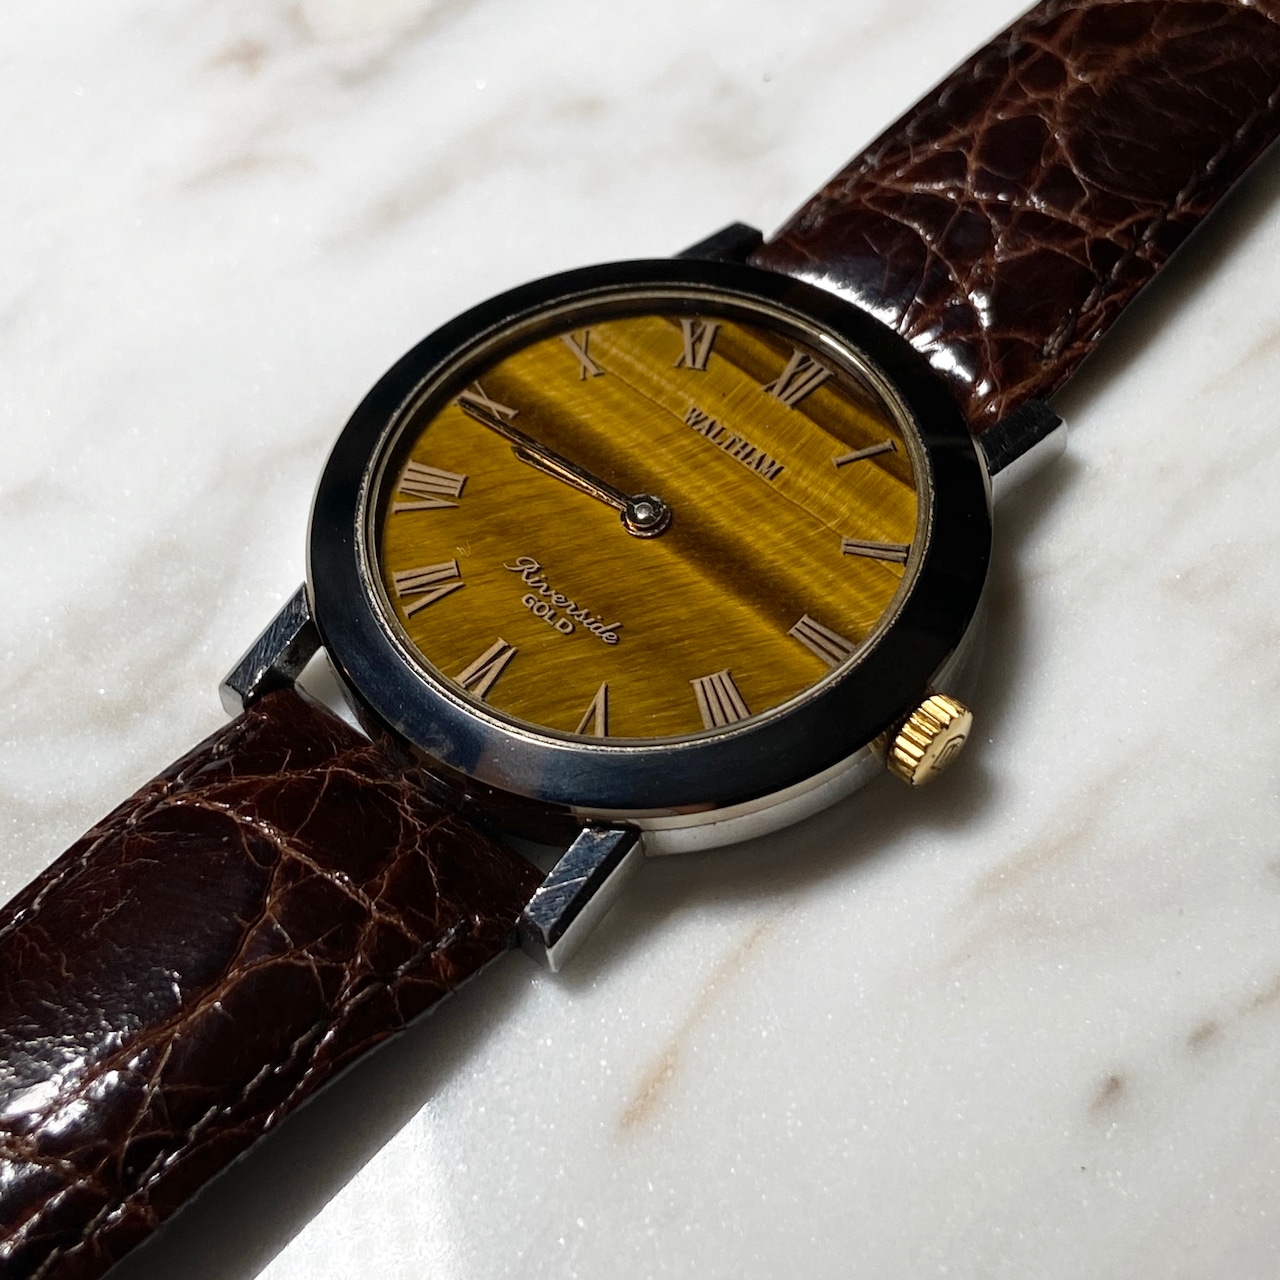 WALTHAM manual winding watch set with tiger eye